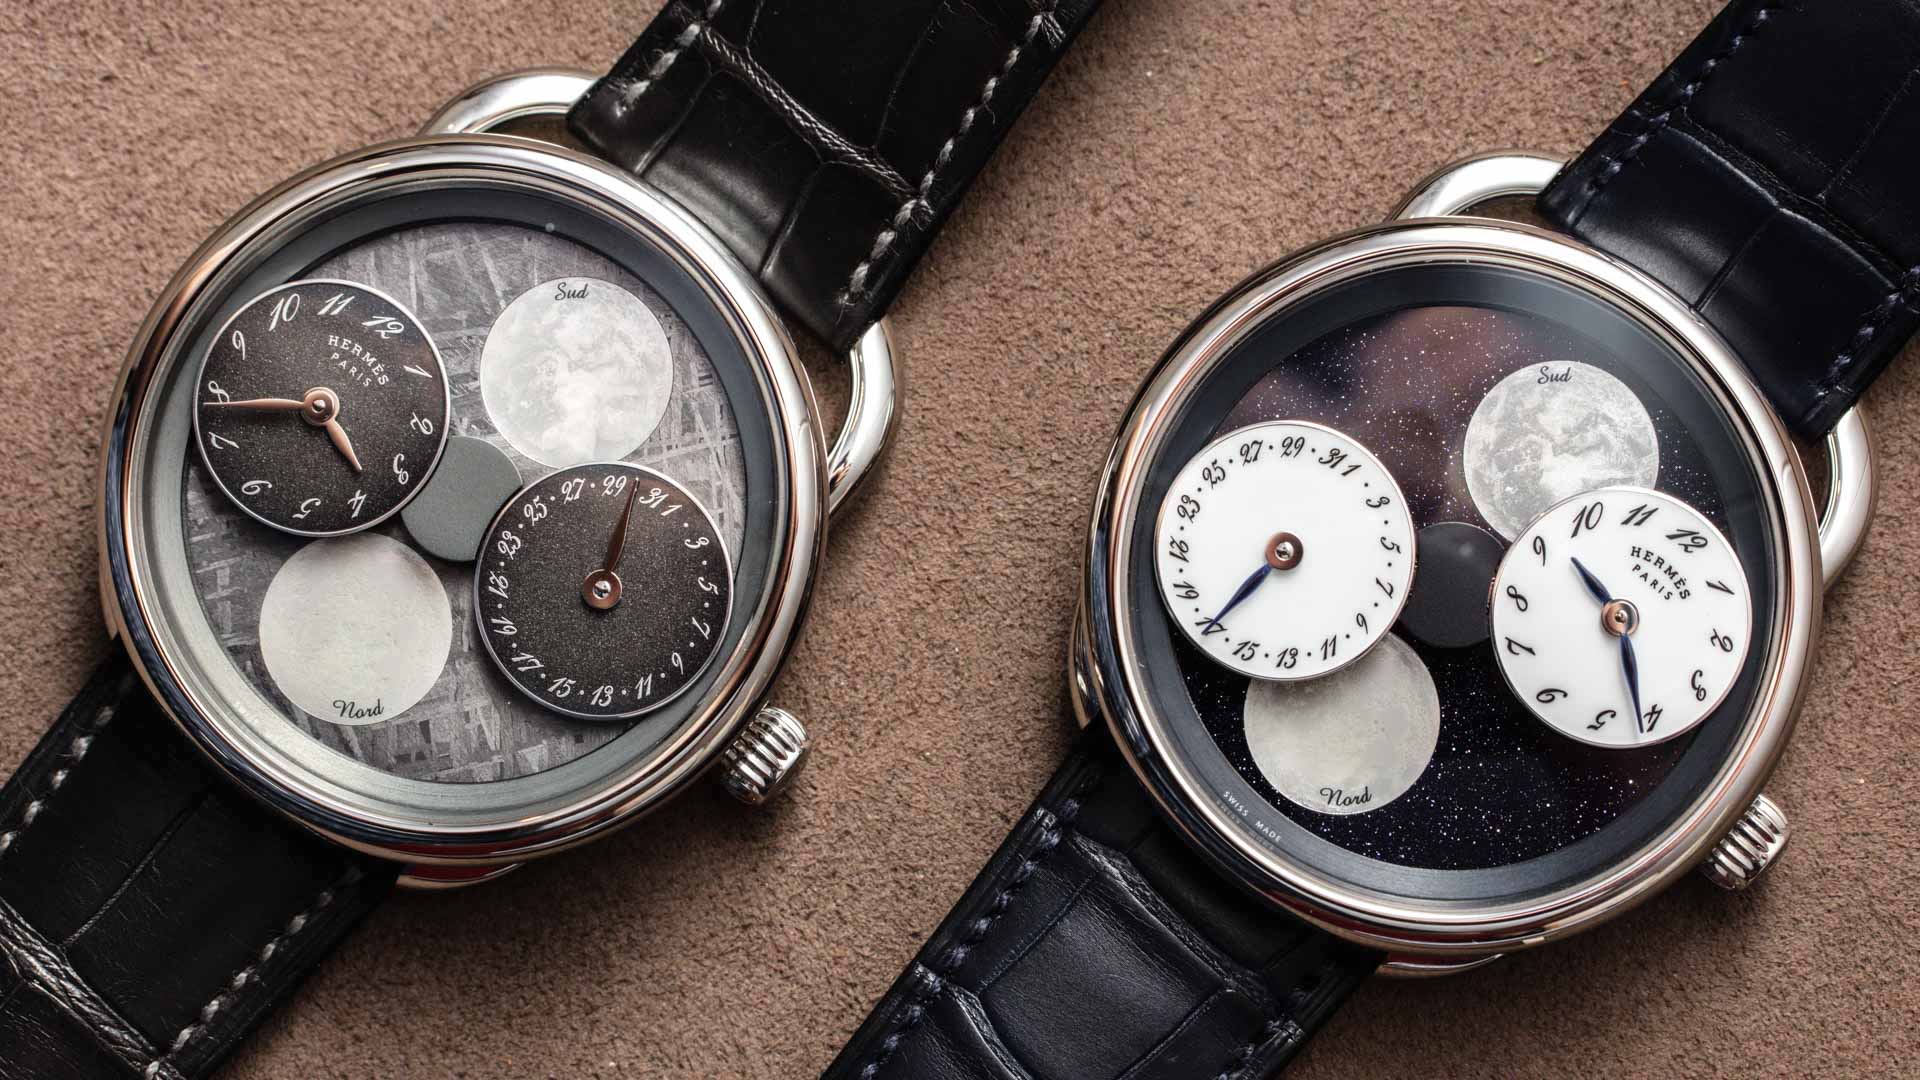 Hermès Arceau L?Heure De La Lune Watch Hands-On